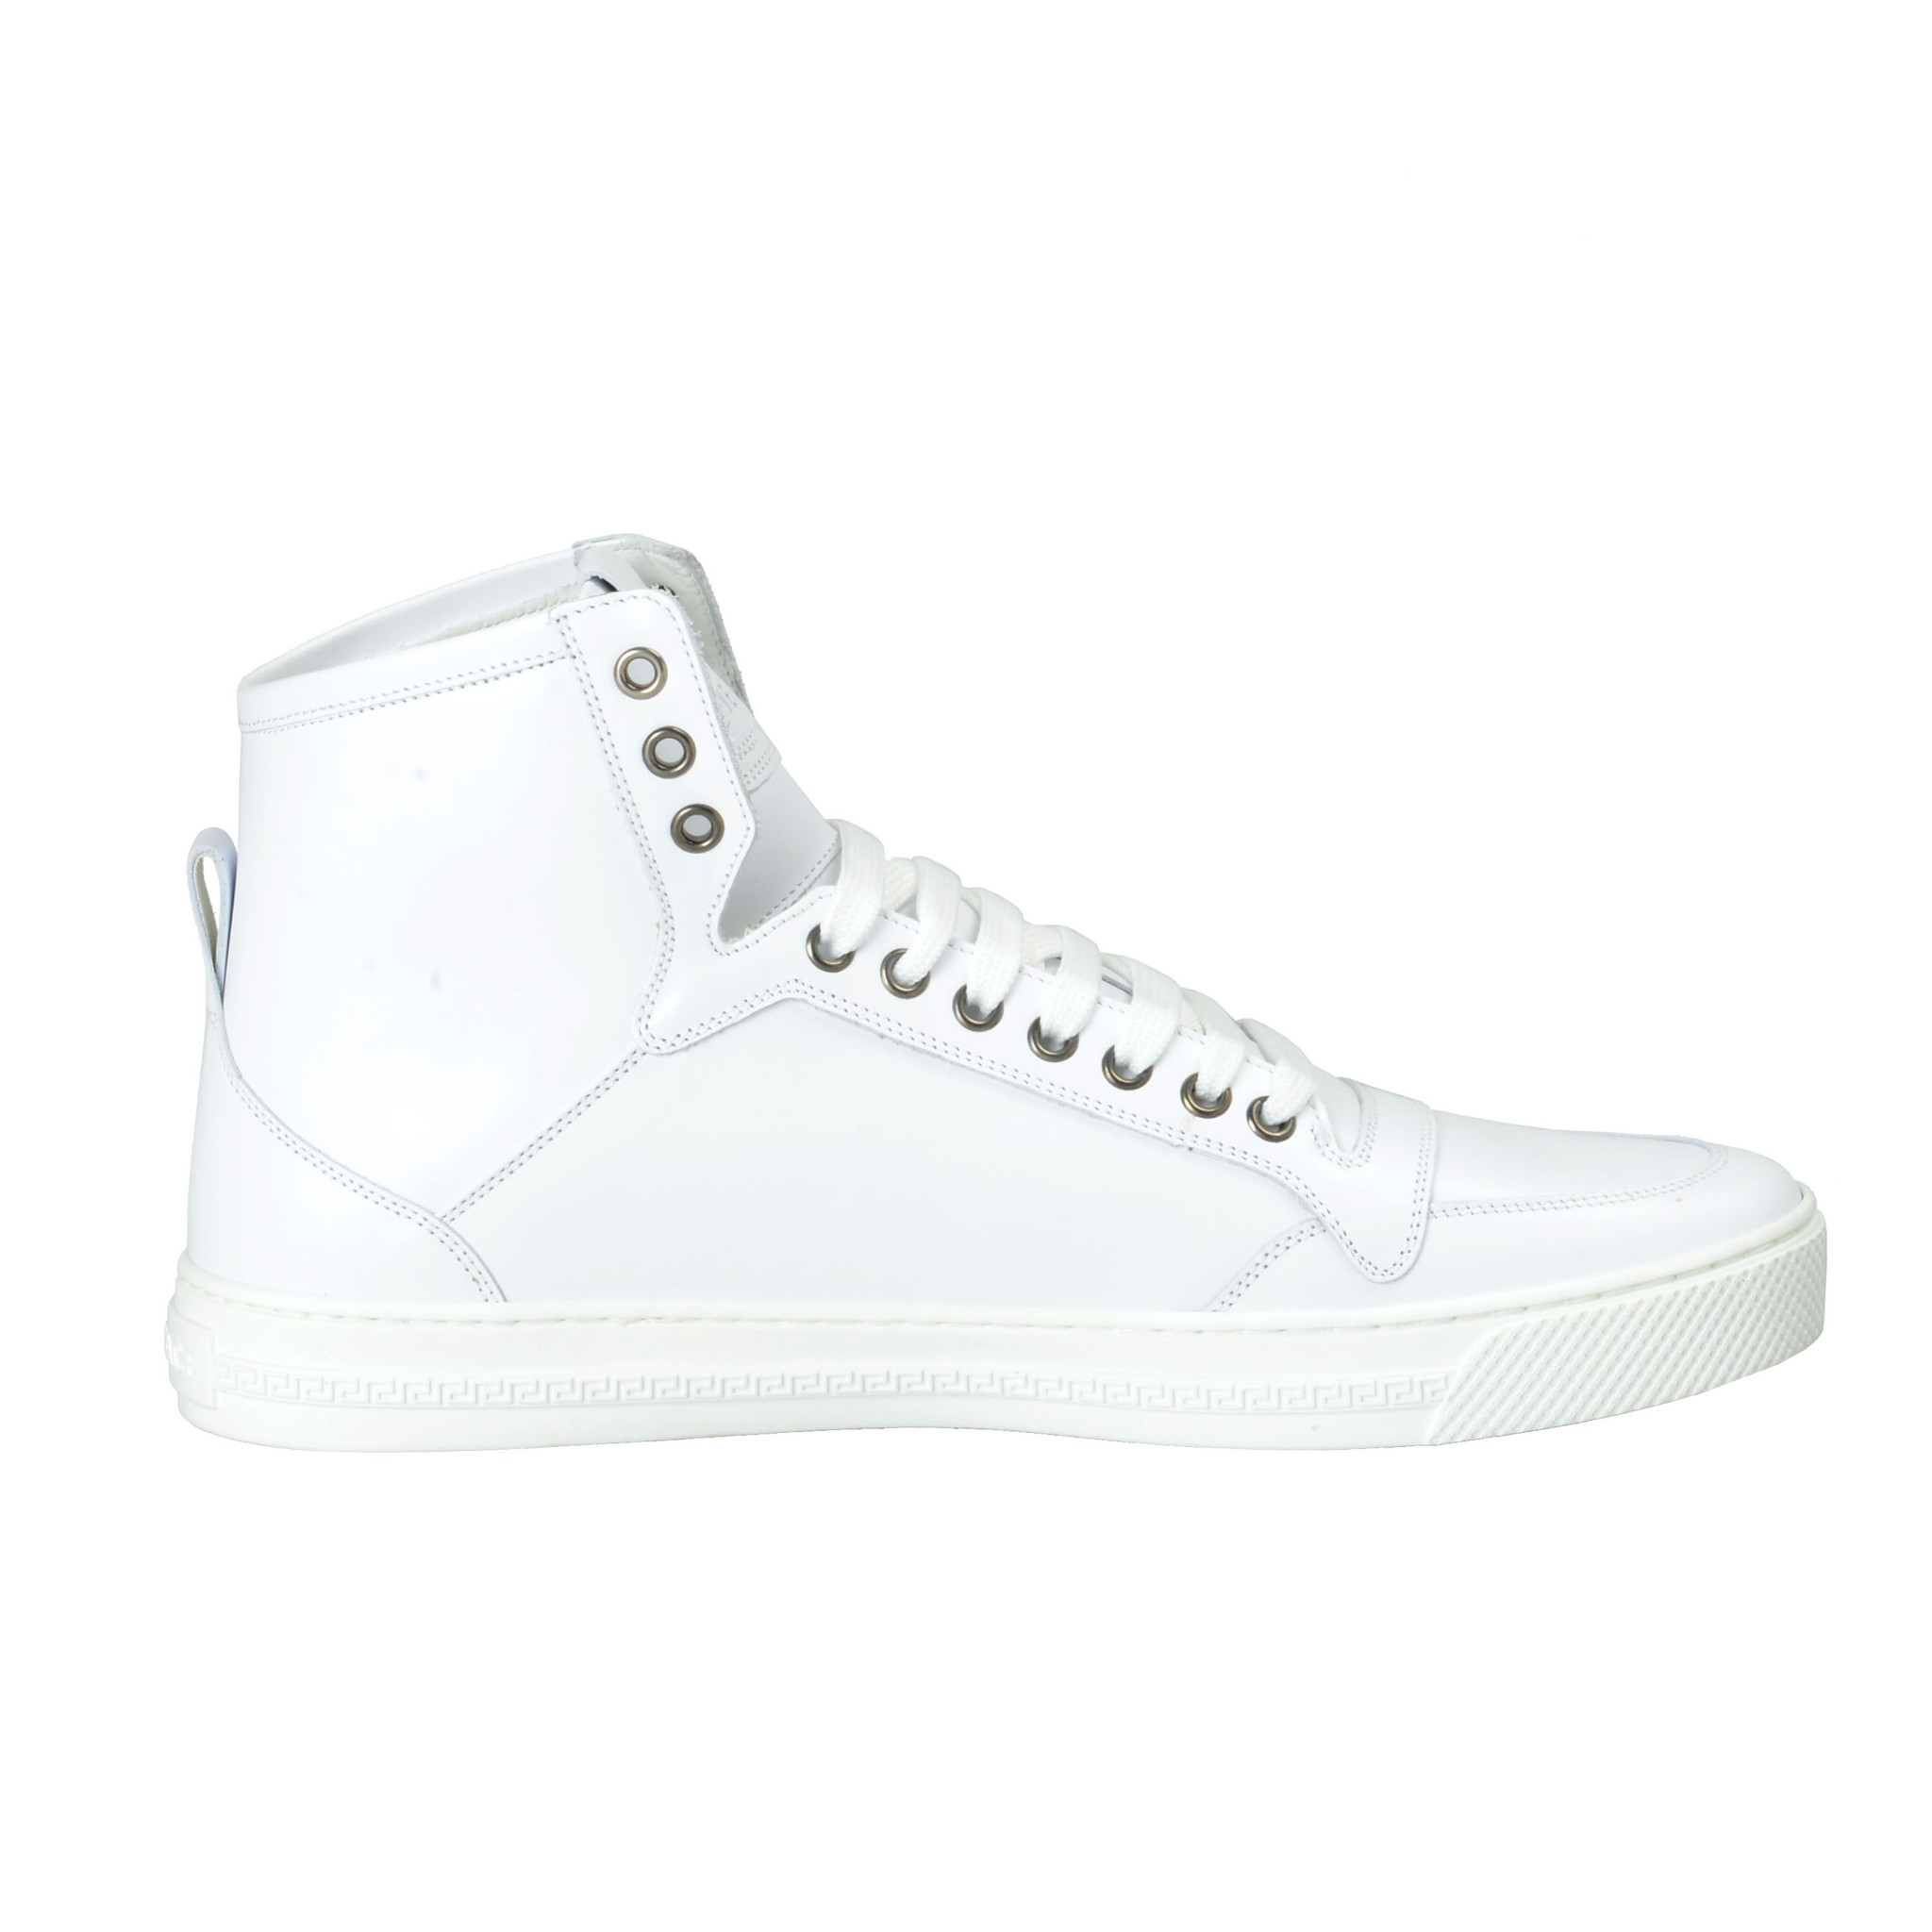 Versace Men's White Leather Medusa Hi Top Fashion Sneakers Shoes Sz 8 ...